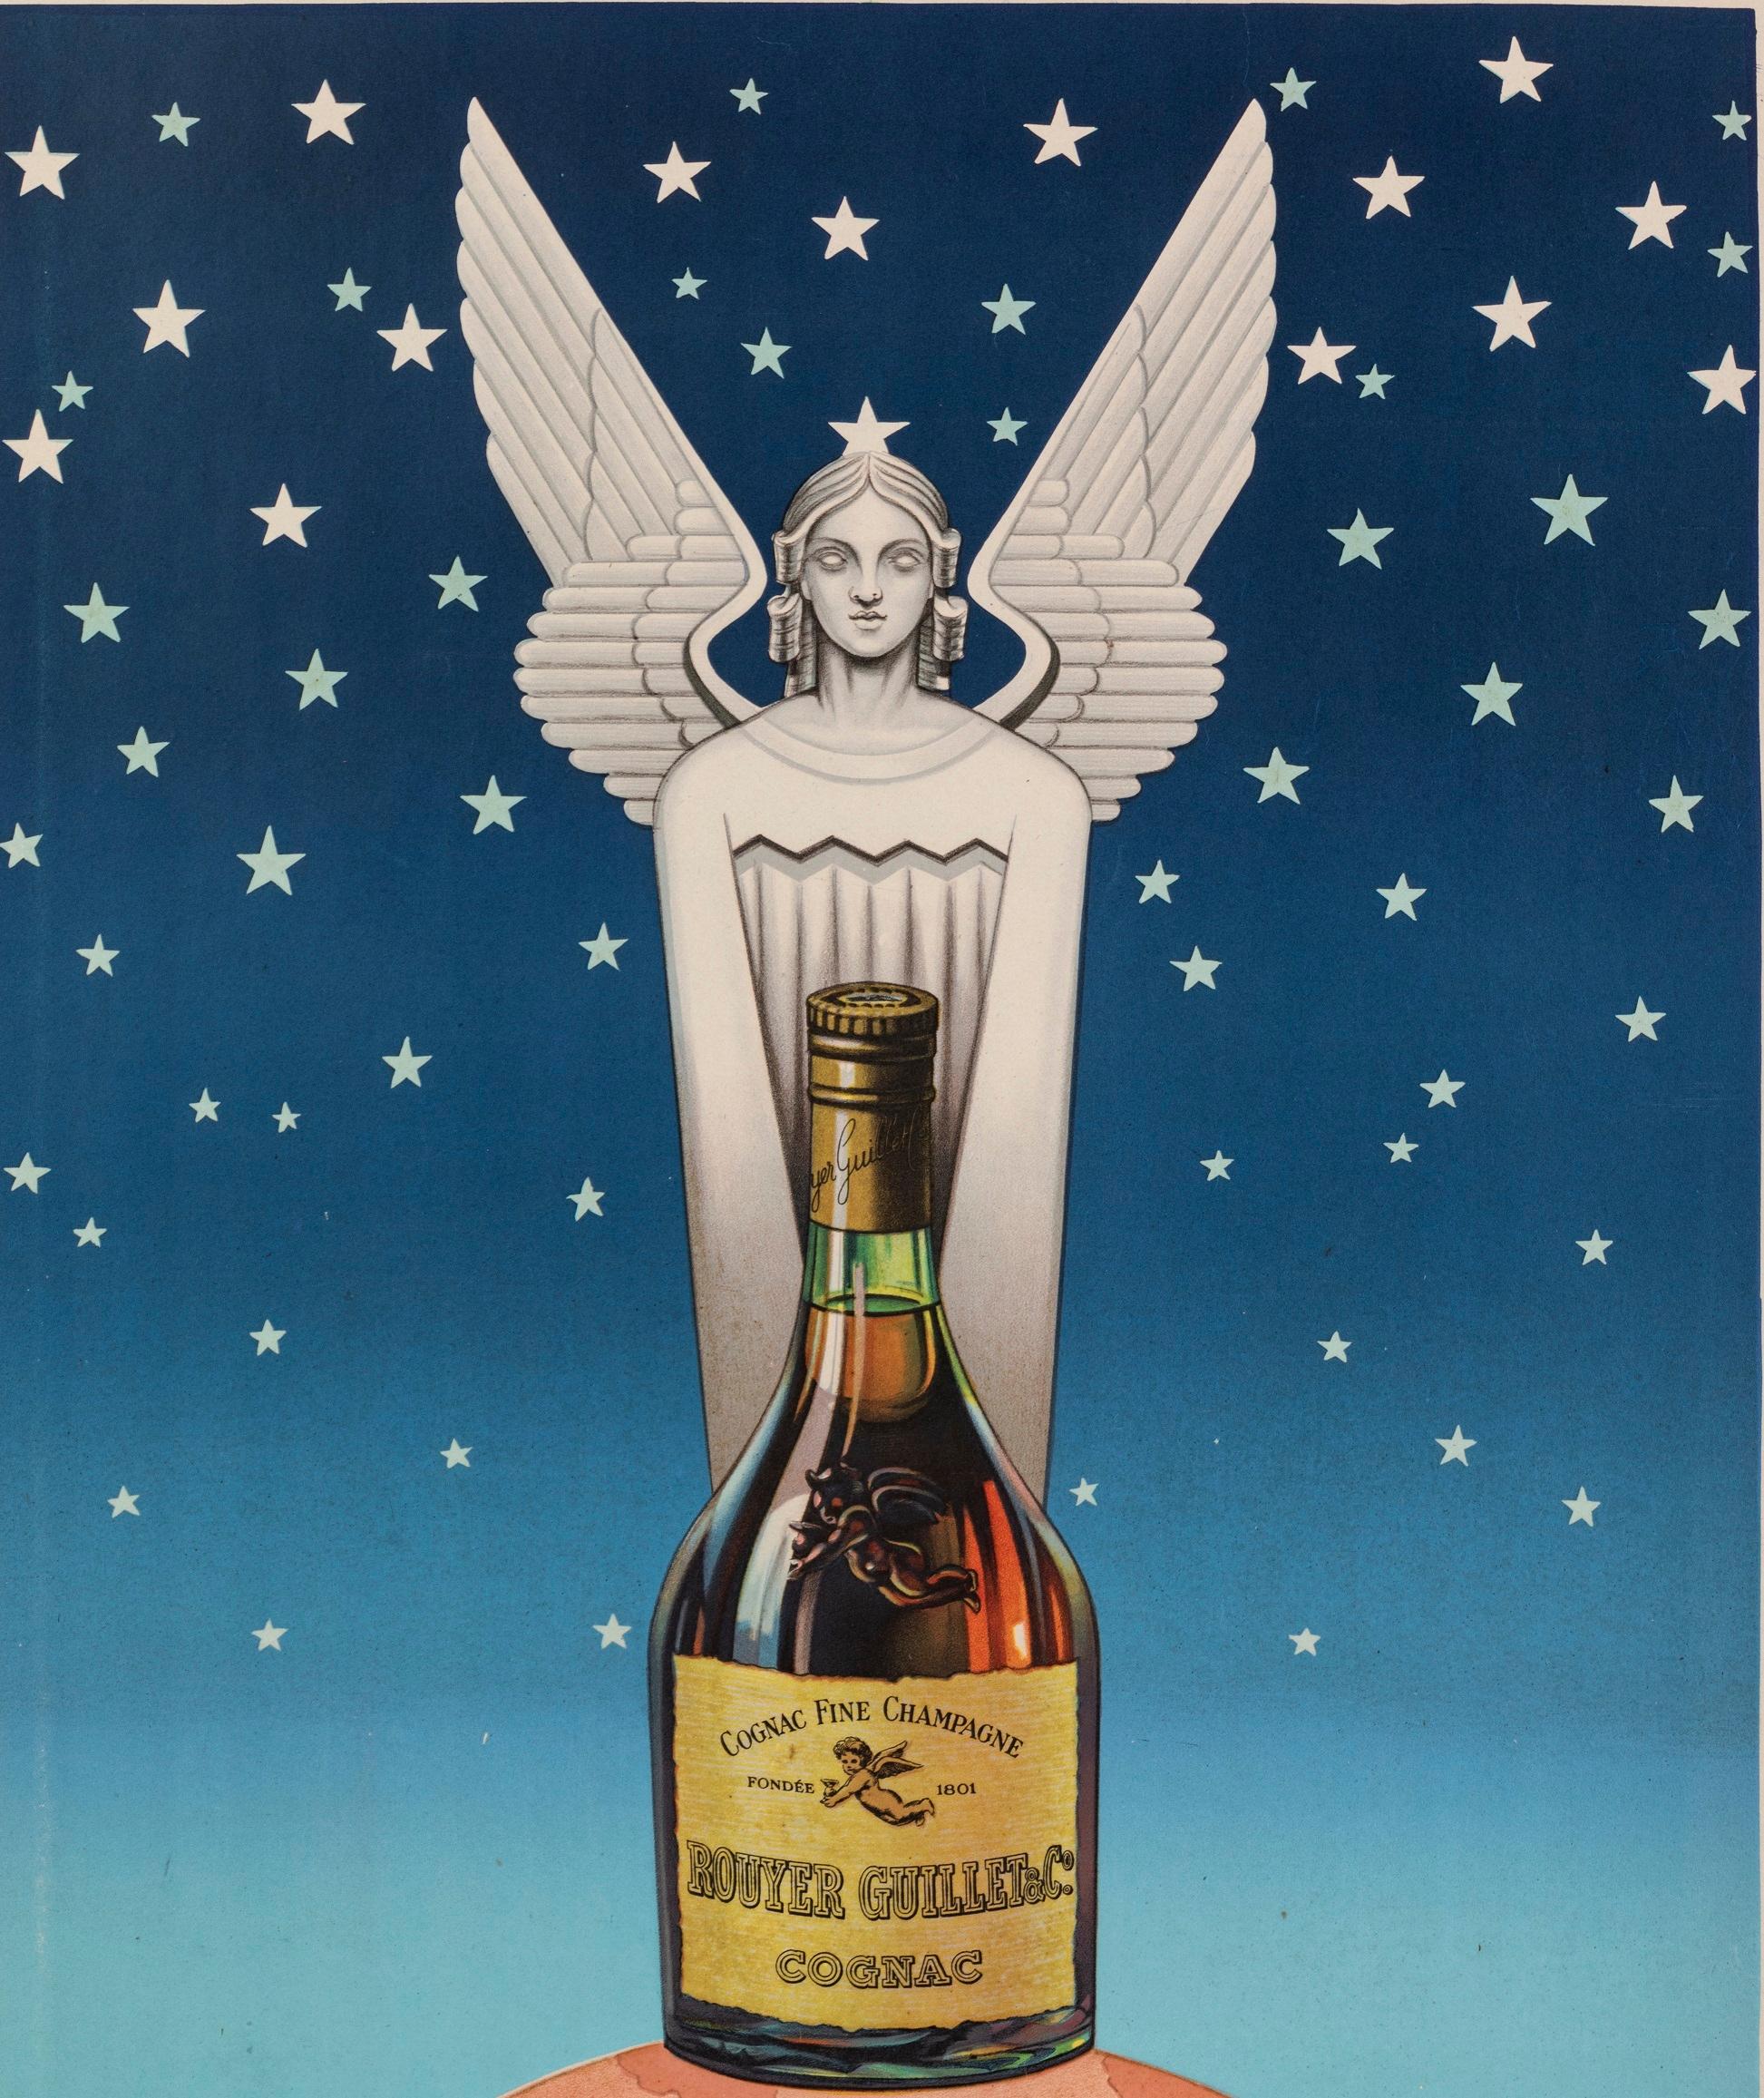 Original Vintage-Plakat von Pub TH für Cognac Rouyer aus dem Jahr 1945.

Künstler: Kneipe TH
Titel: Cognac Rouyer
Datum: 1945
Größe: 31,3 x 46,9 Zoll / 79,5 x 119 cm
Druckerei: Union Parisienne de Publicité - 52 Chaussée d'Antin - Paris
MATERIALIEN